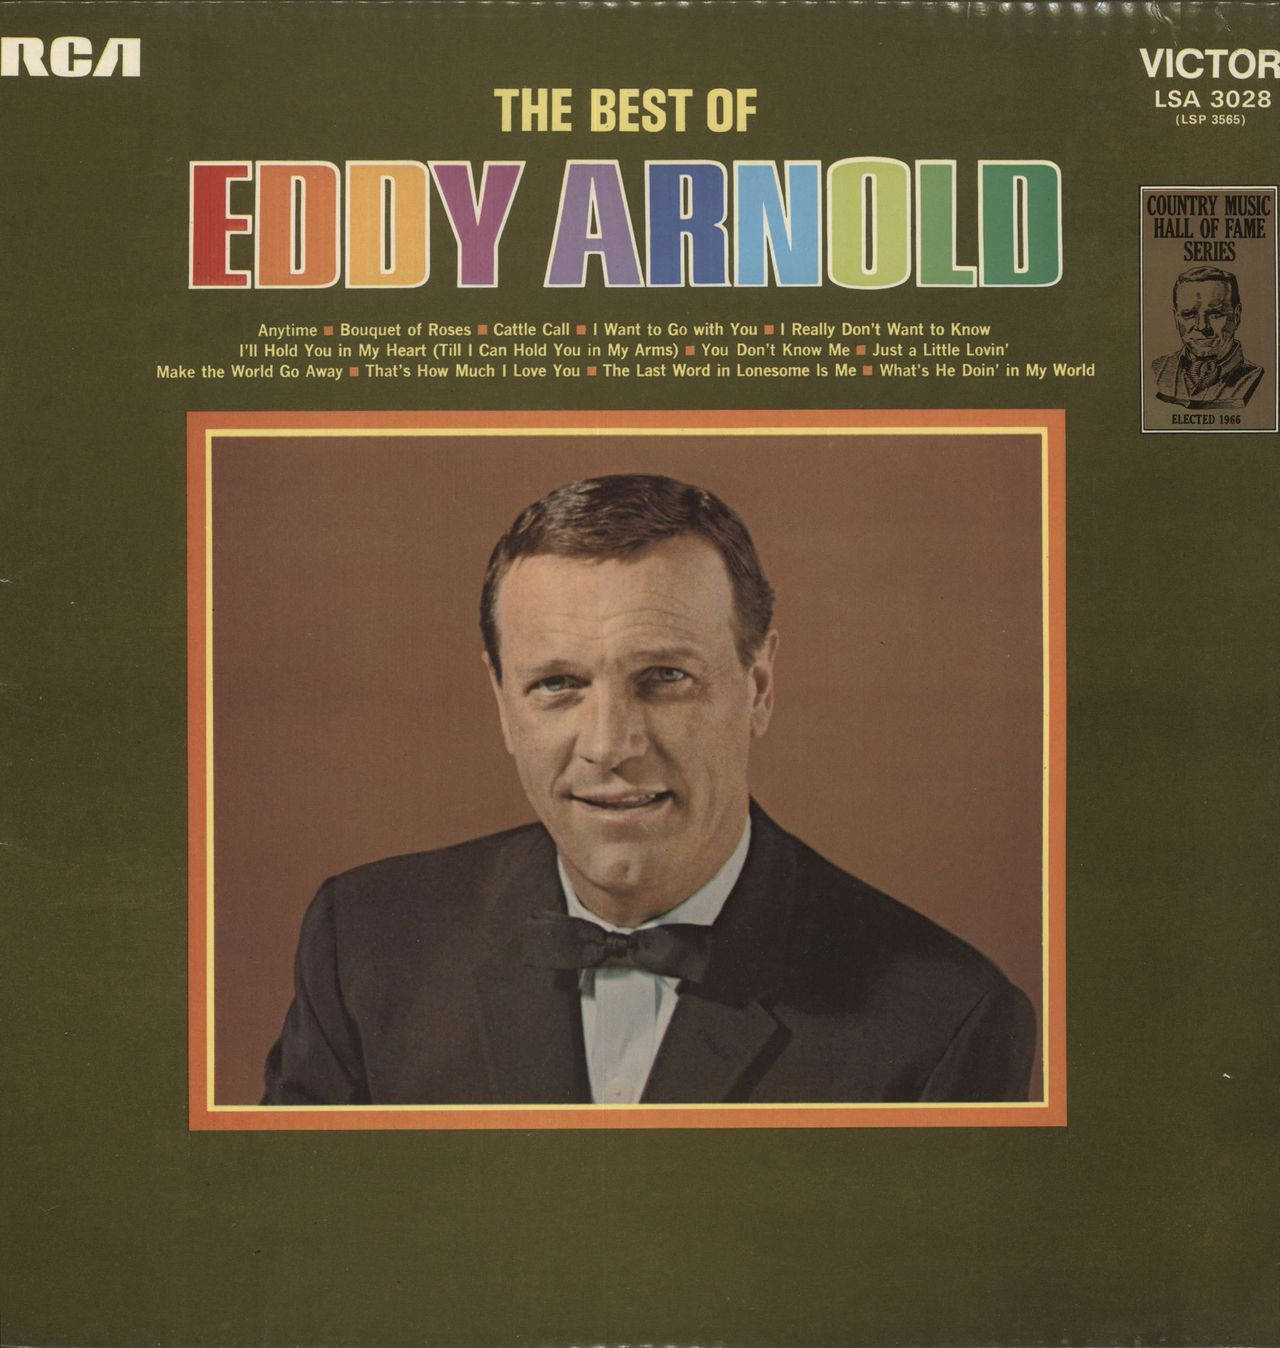 The Best Of Eddy Arnold Vinyl Cover Wallpaper